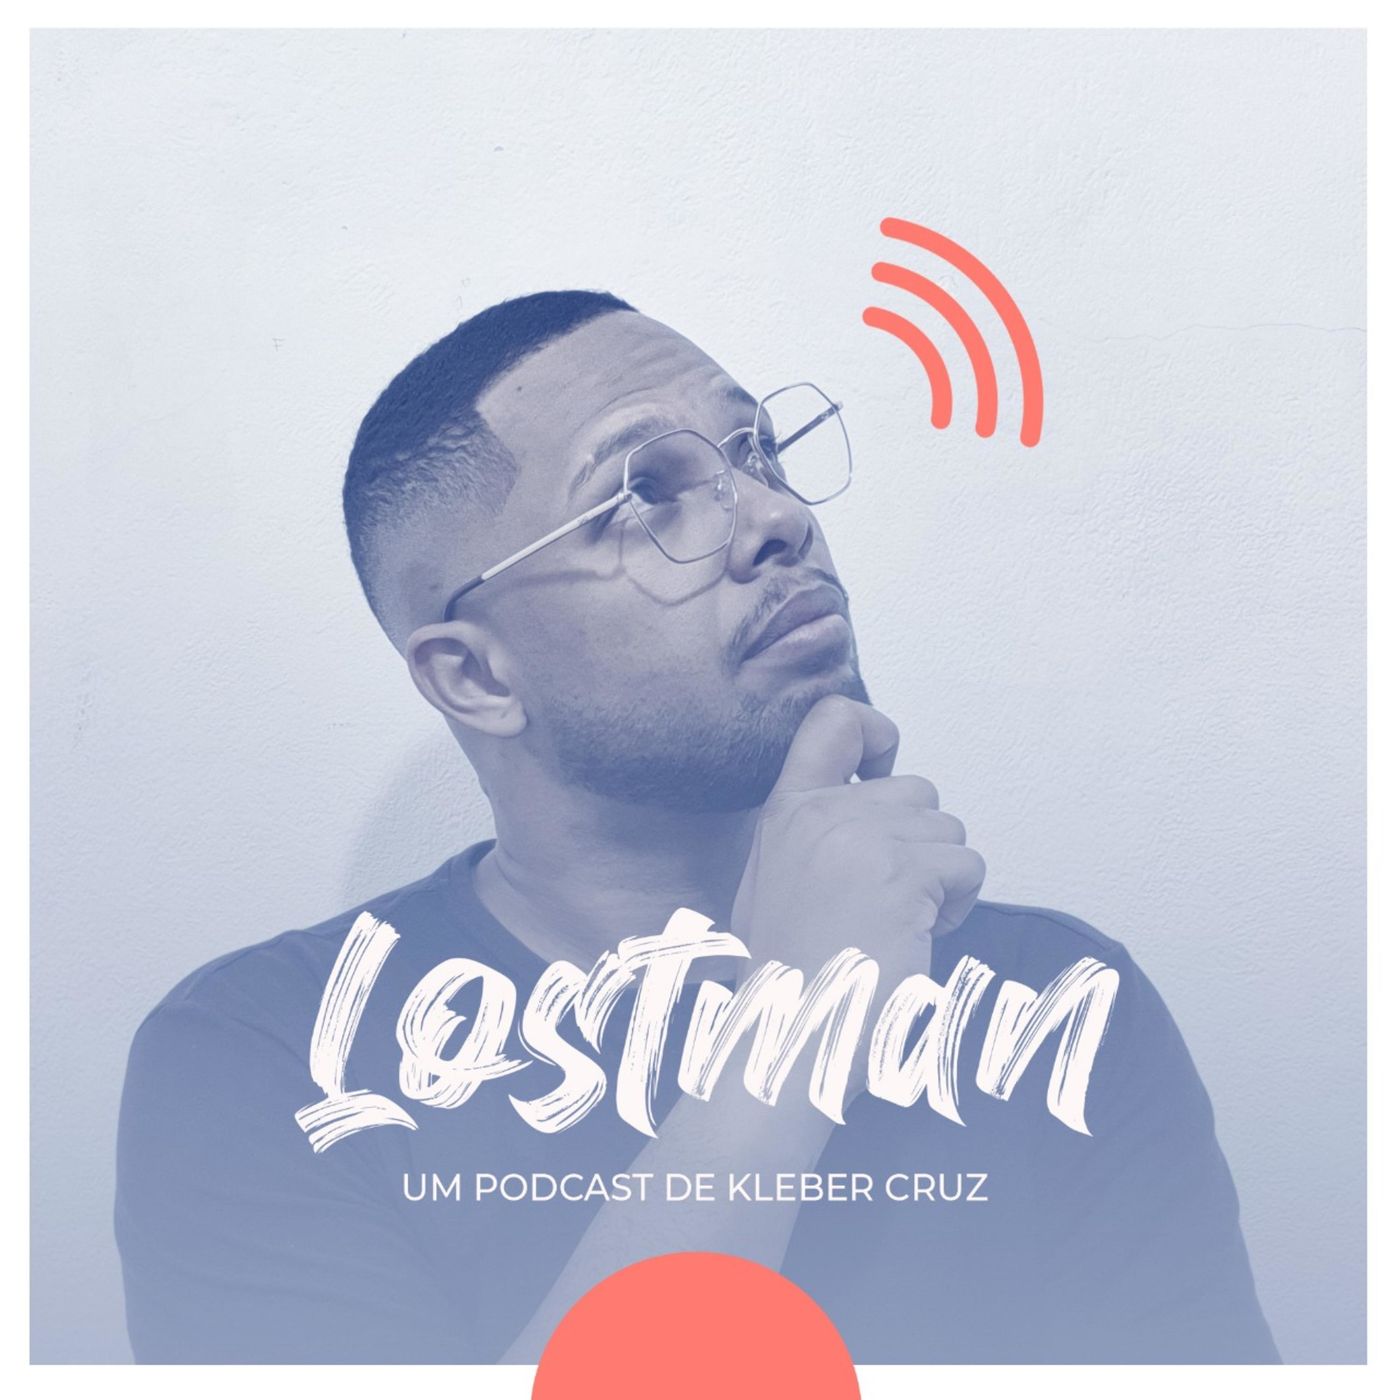 Lostman